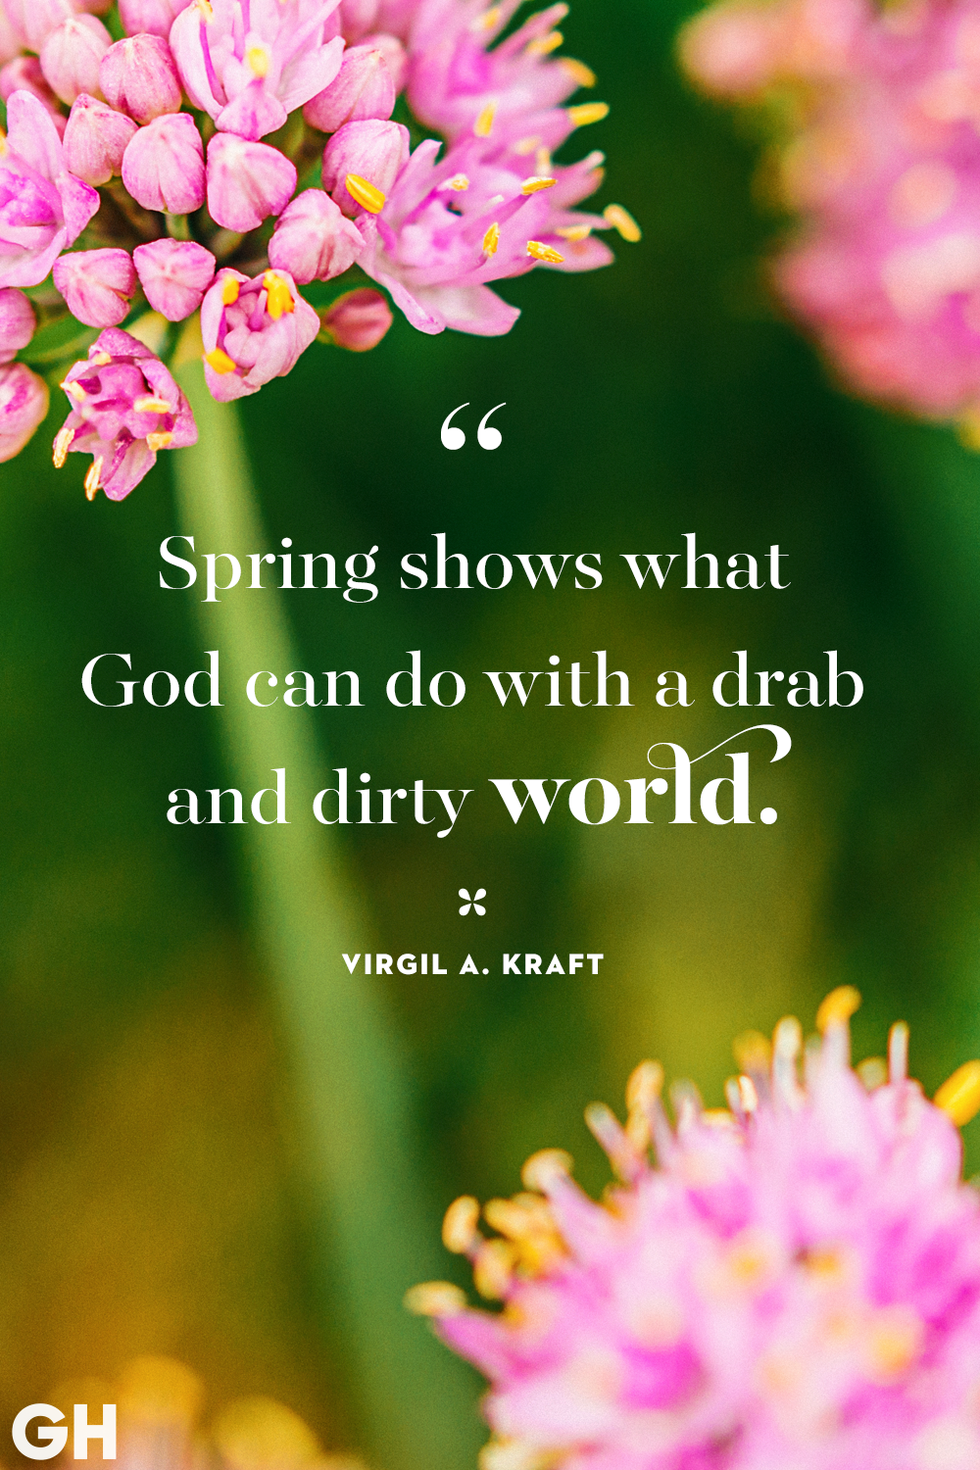 spring quotes virgil a krafit